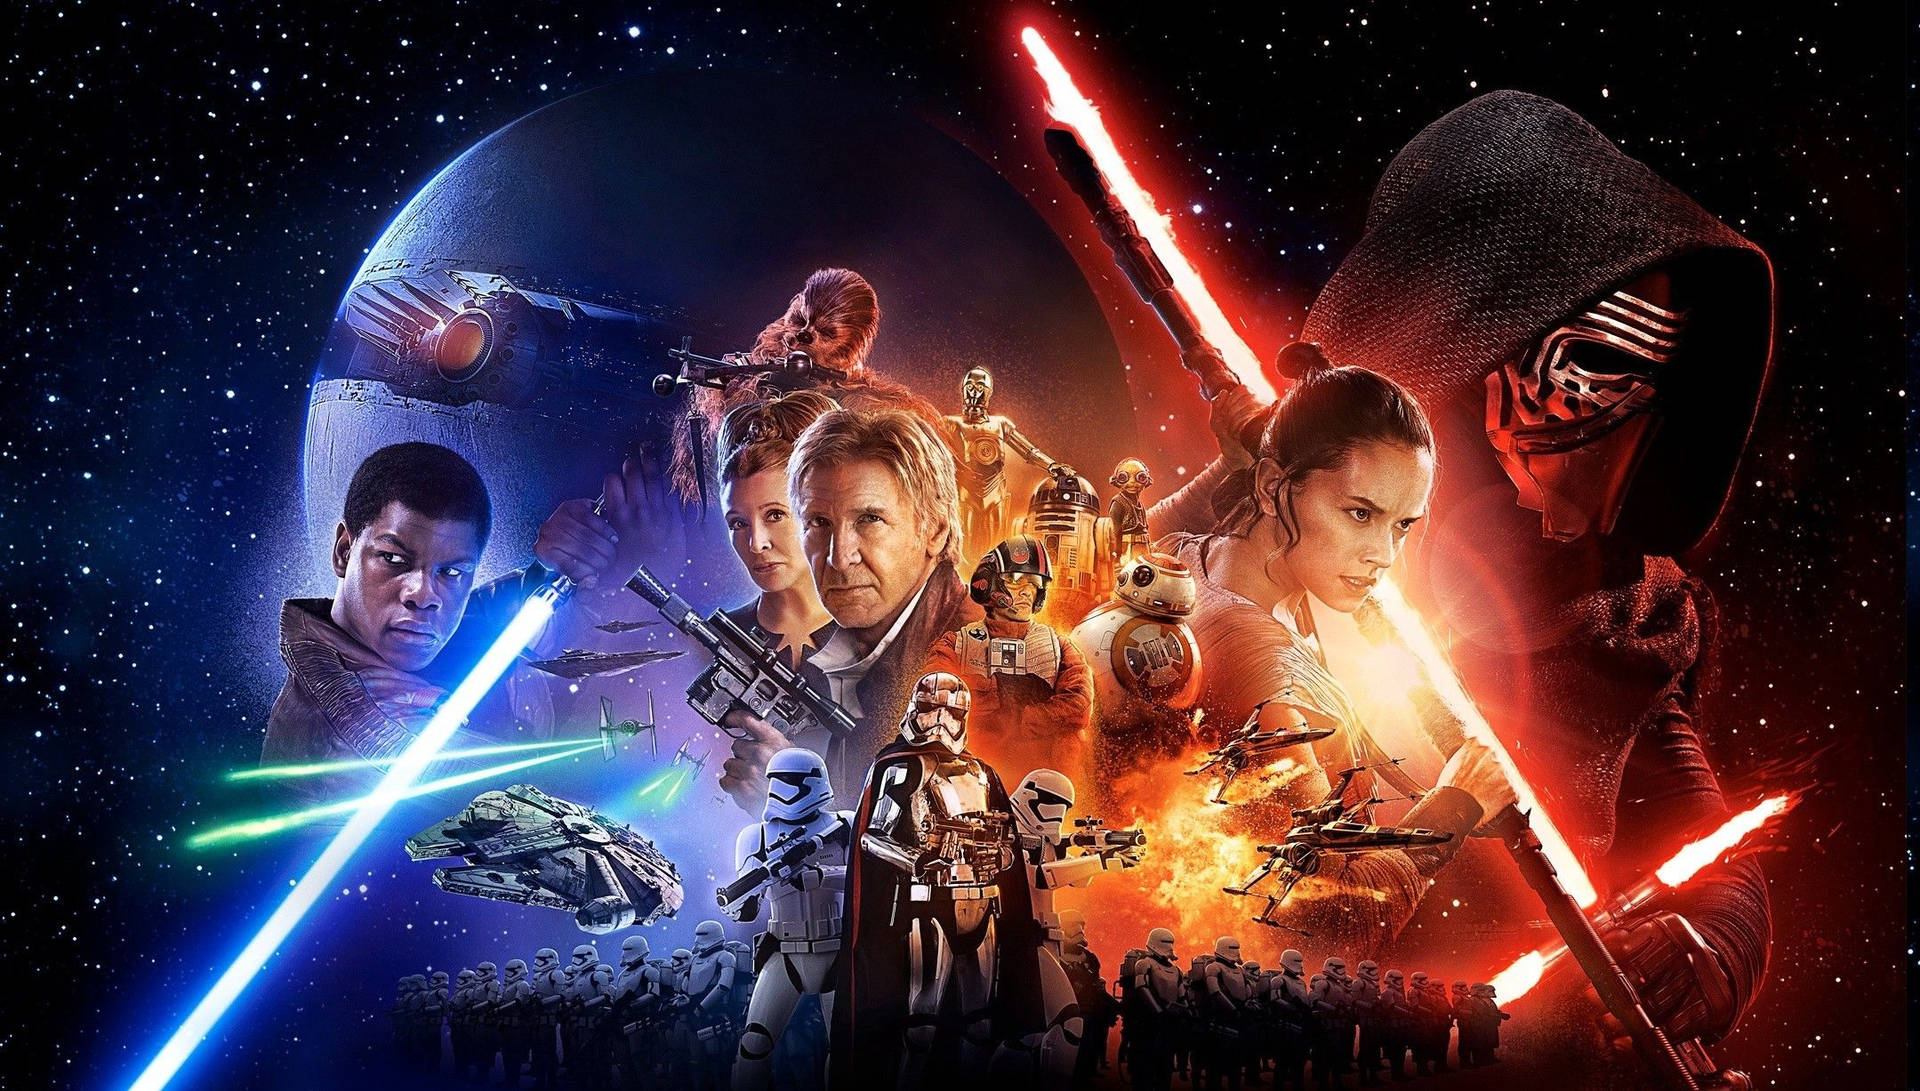 An iconic look at the epic hero of Star Wars, Luke Skywalker Wallpaper